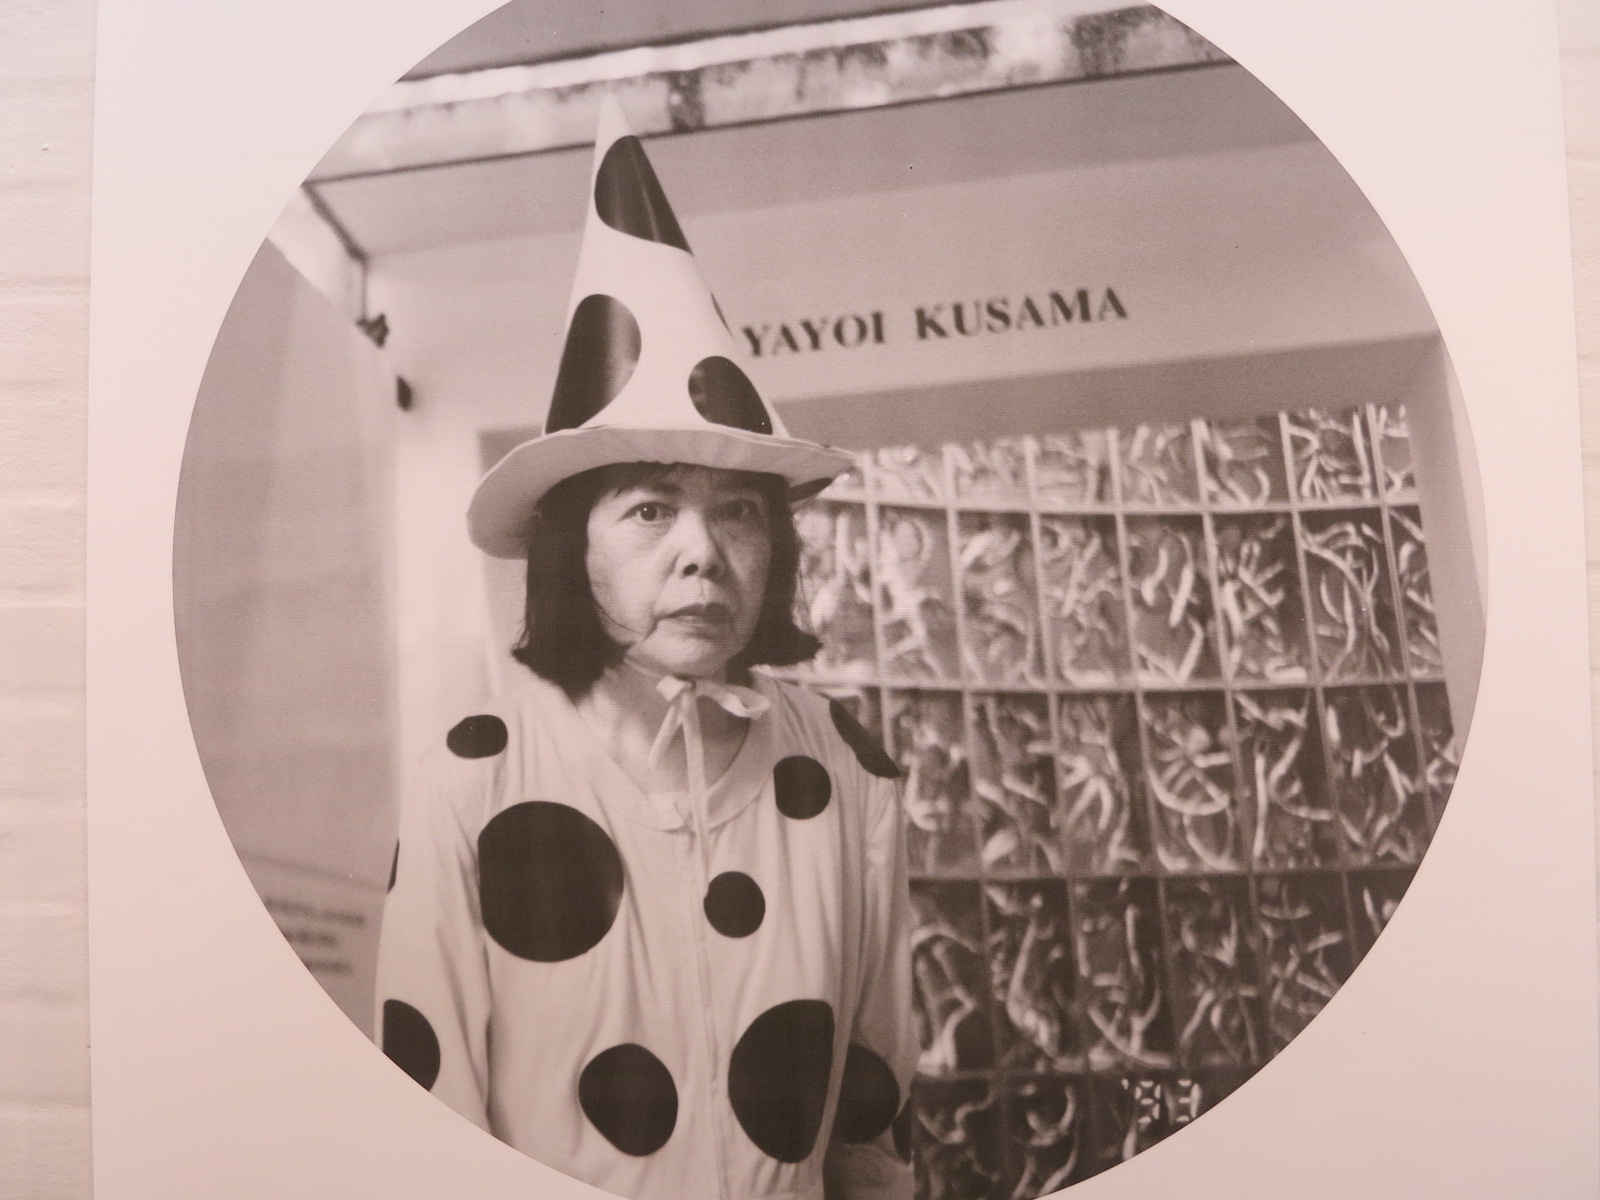 Yayoi Kusama at Louisiana Museum of Modern Art, Denmark.